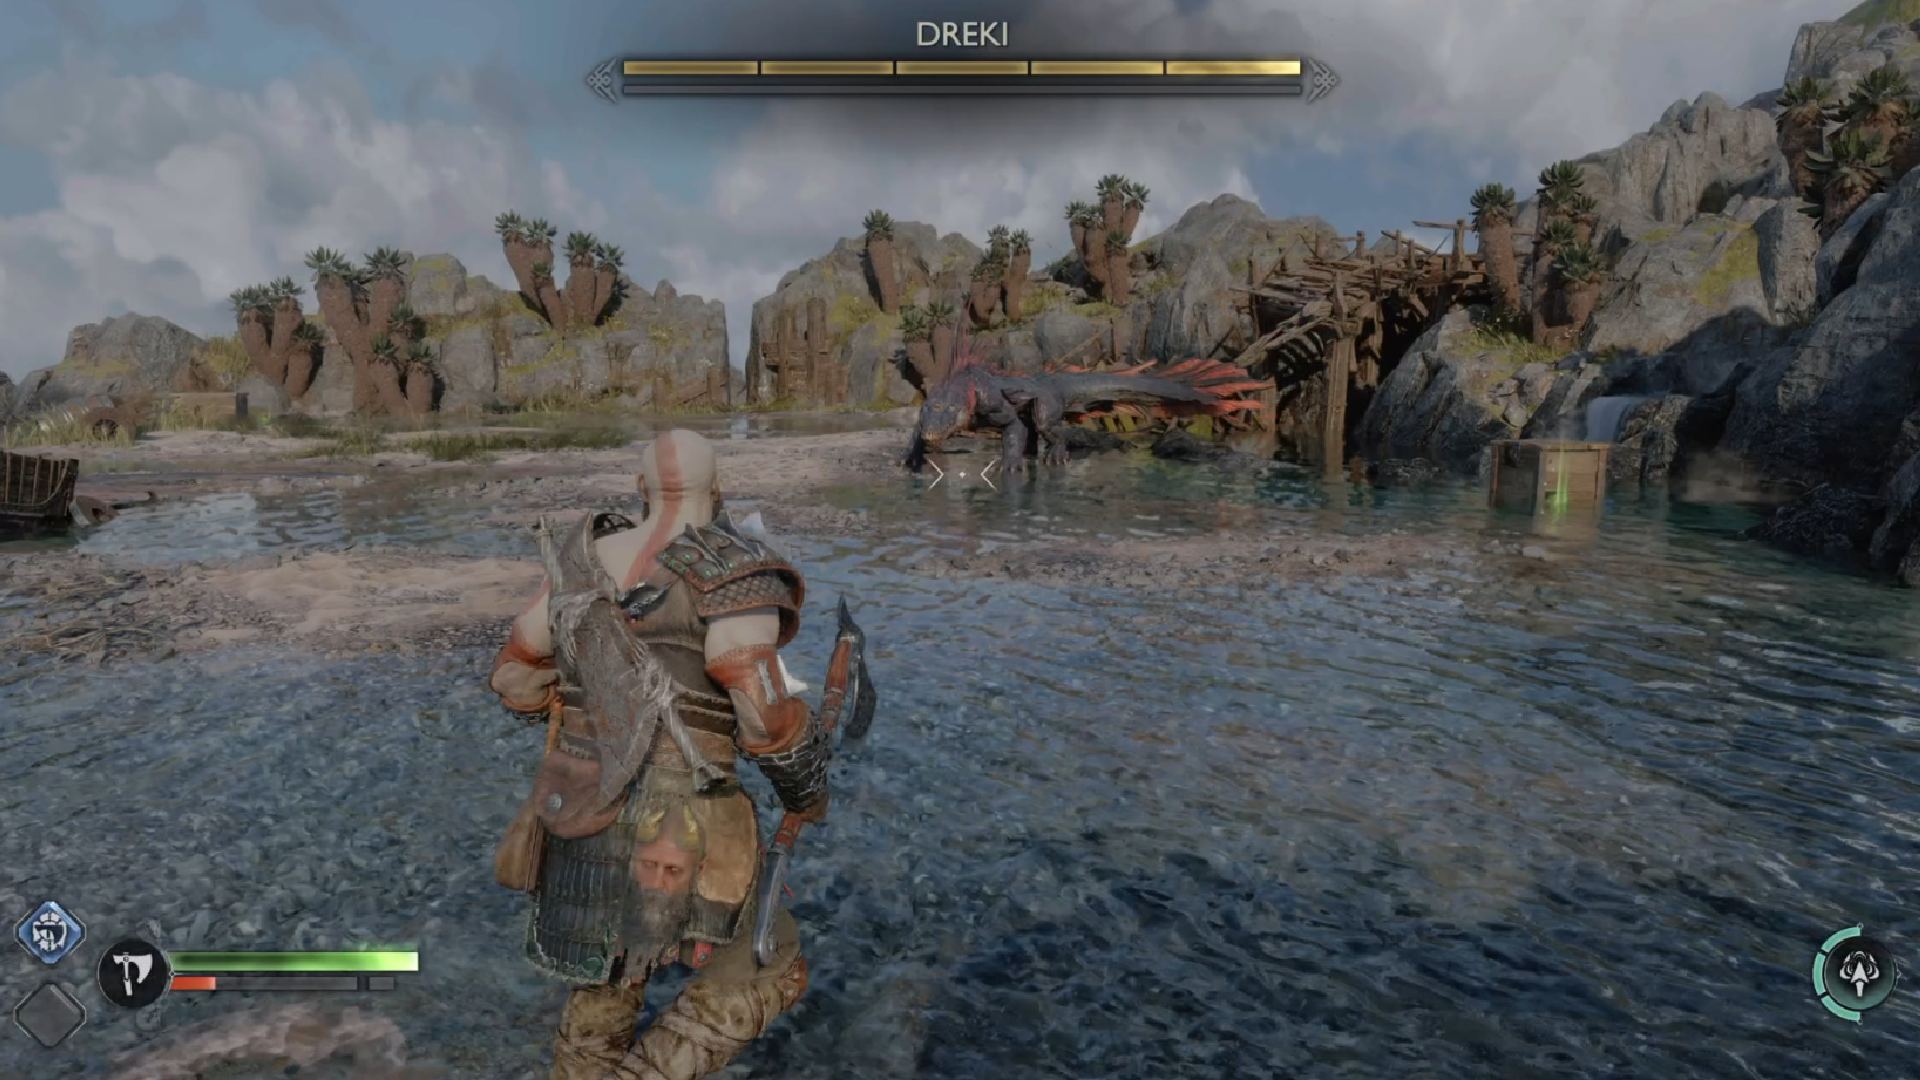 God of War Ragnarok Chaos Flame Locations: Kratos can be seen fighting a Dreki